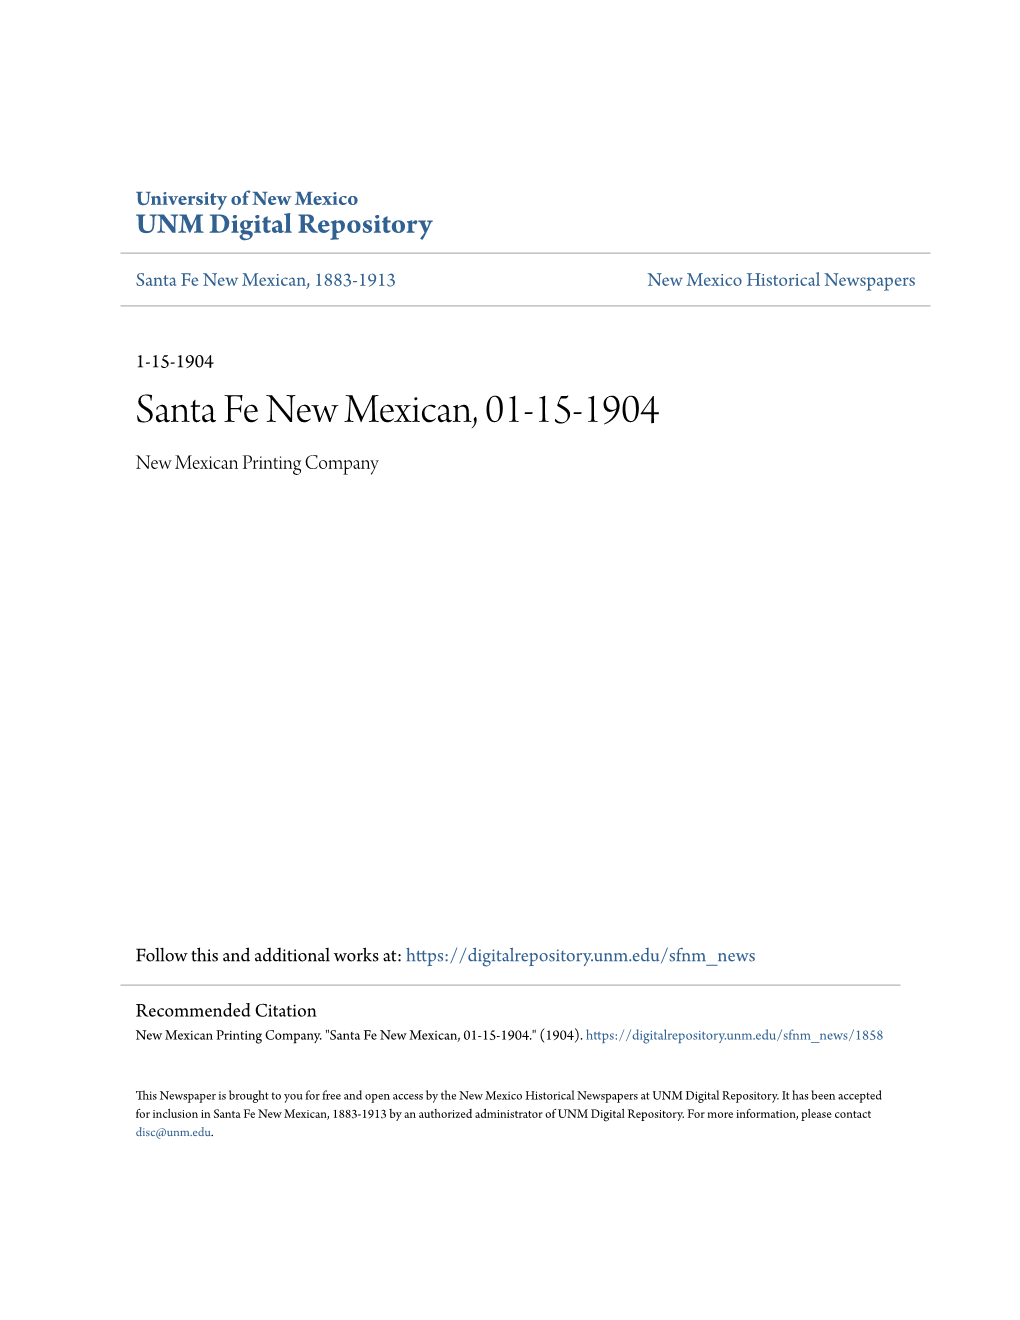 Santa Fe New Mexican, 01-15-1904 New Mexican Printing Company